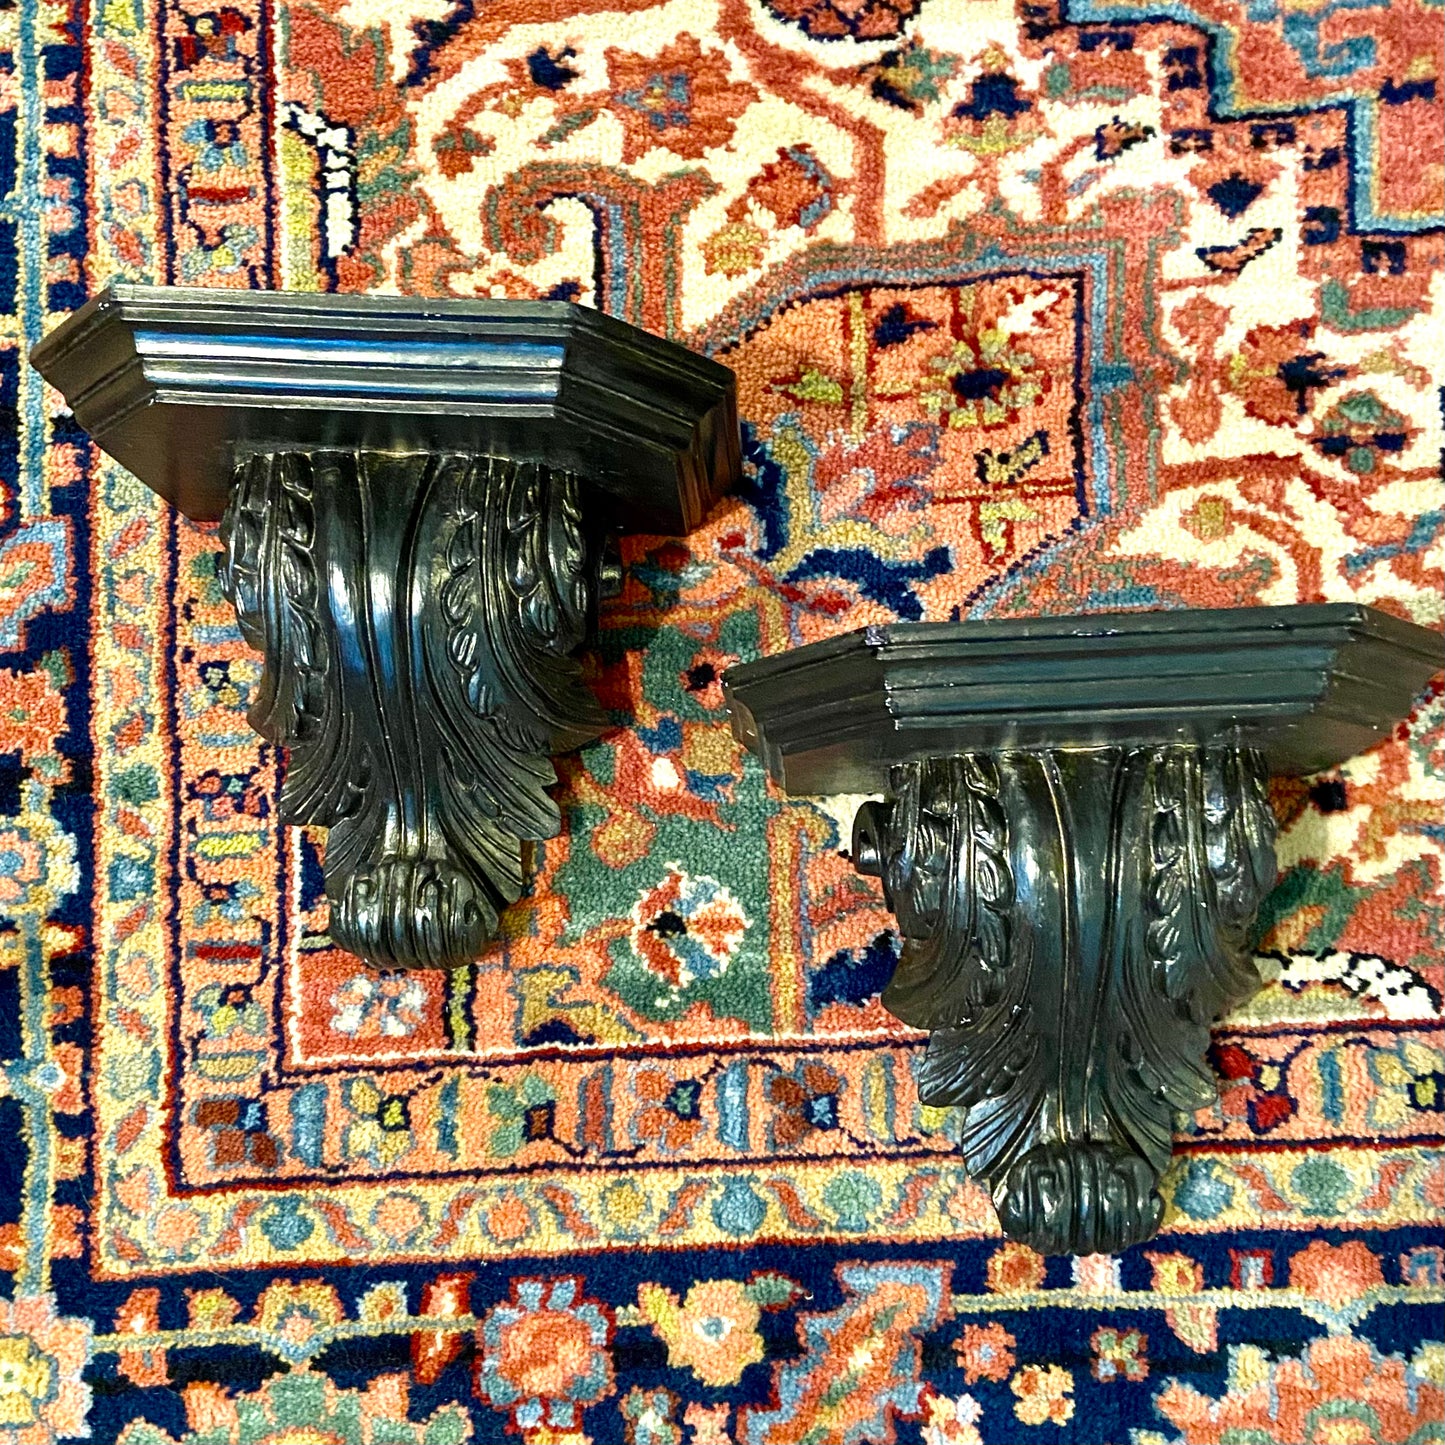 Pair of vintage ebony resin wall sconce pair (2) shelves 11x7” - Pristine!